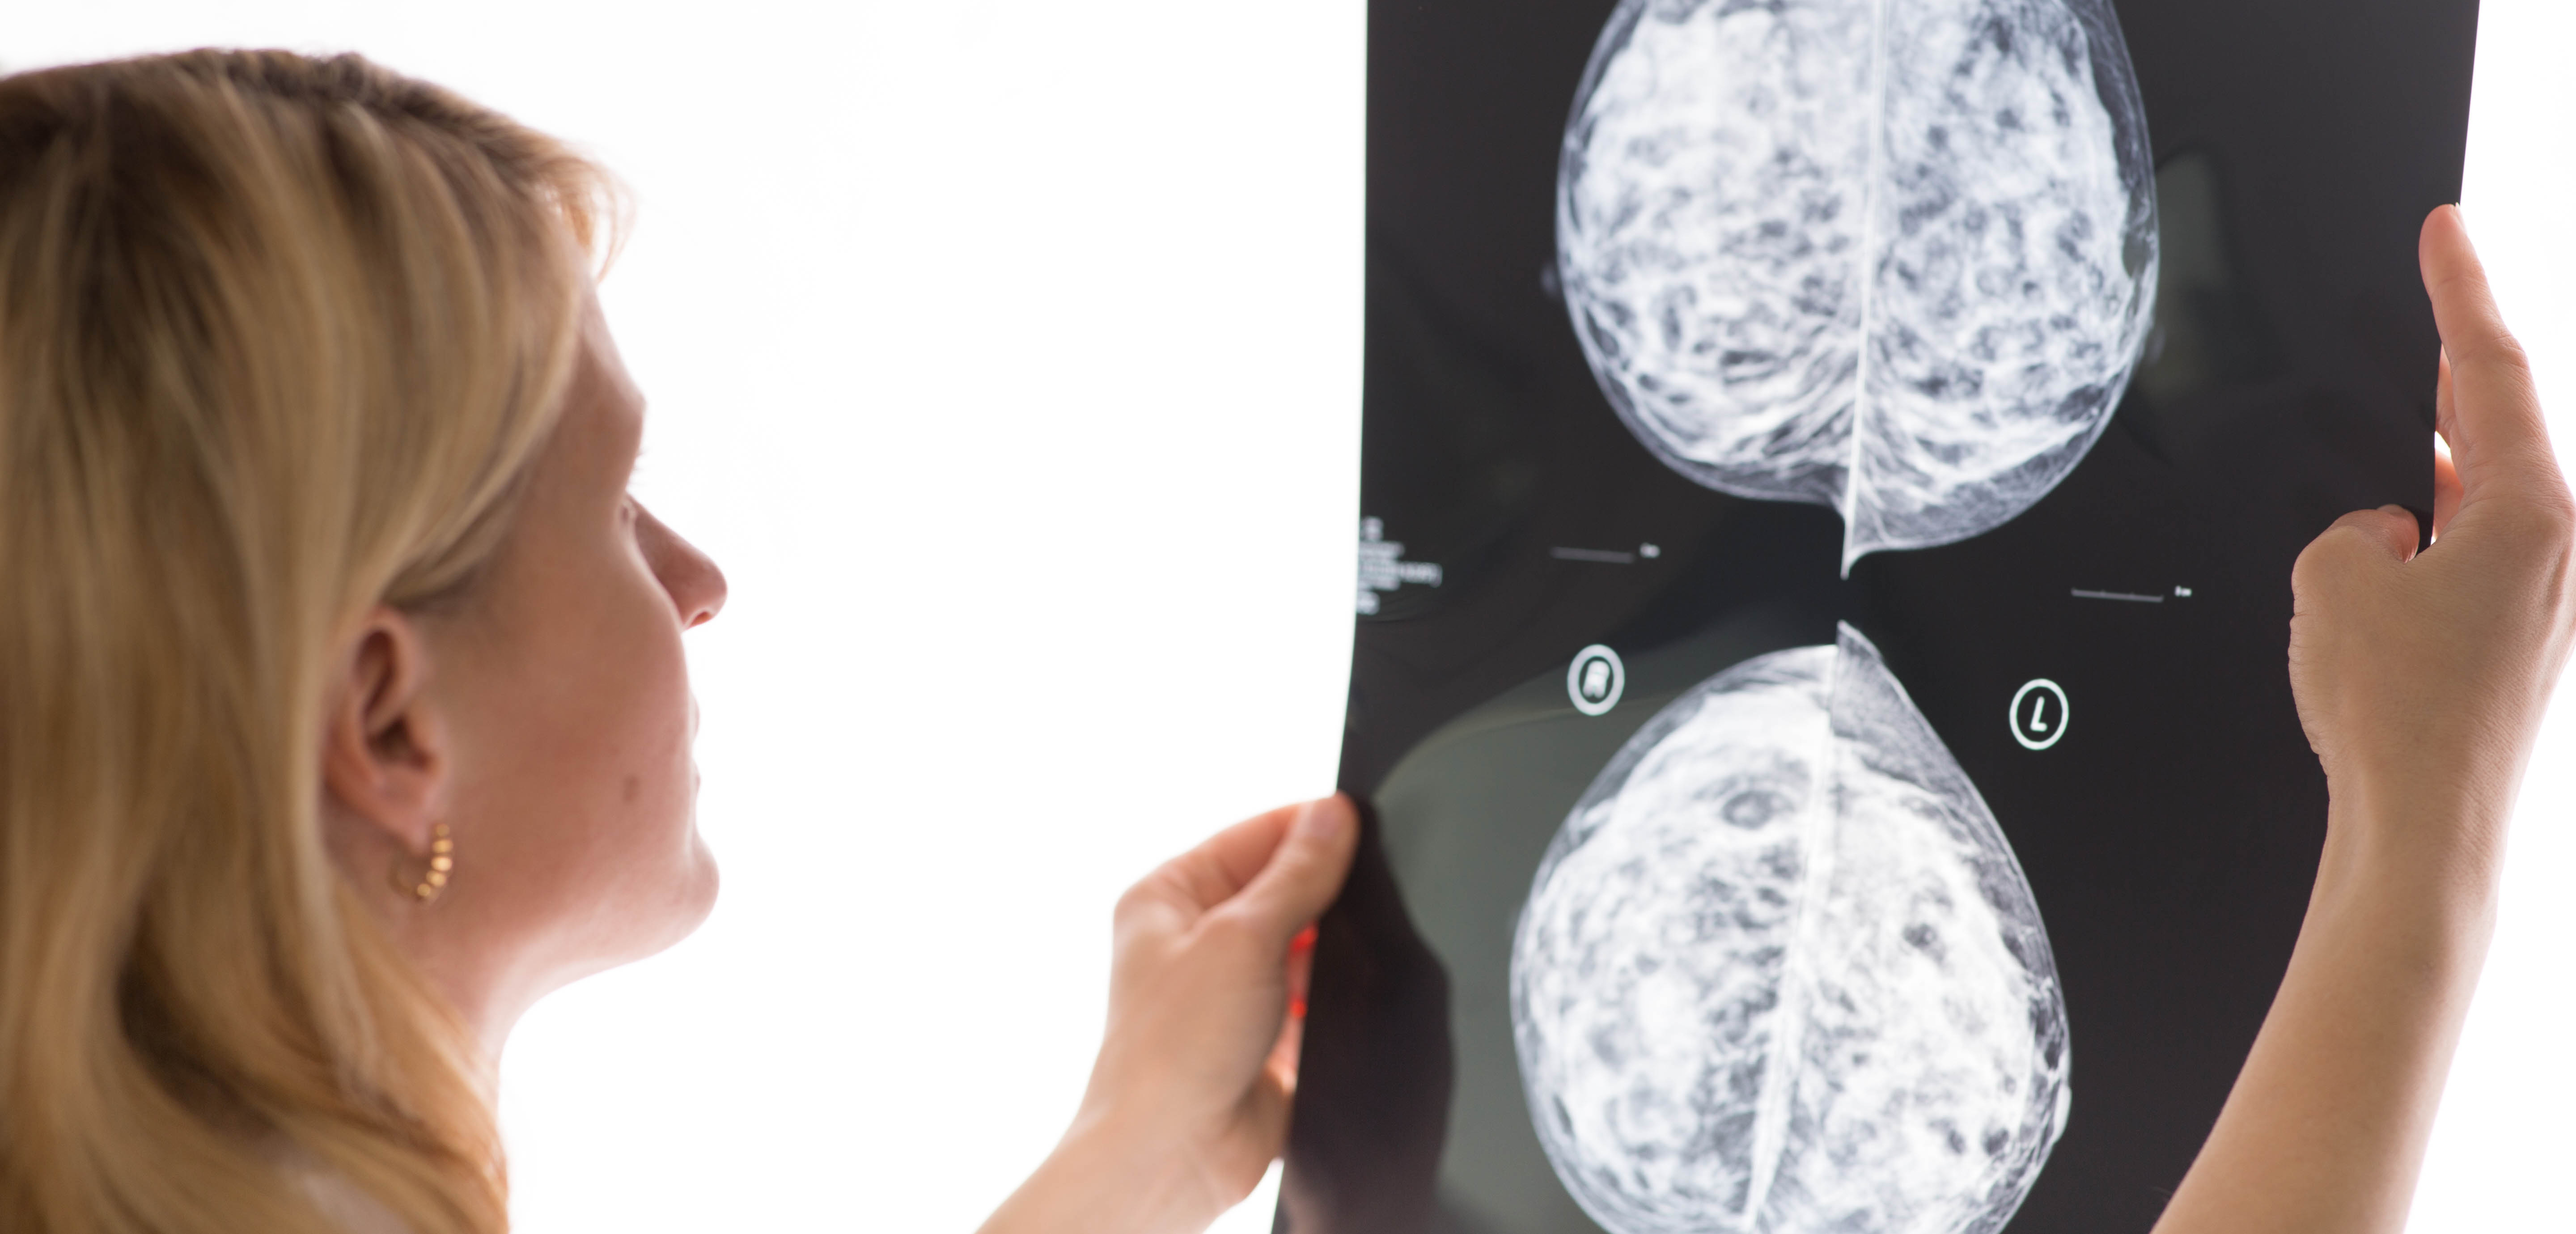 female doctor examining a mammogram result on medical monitor